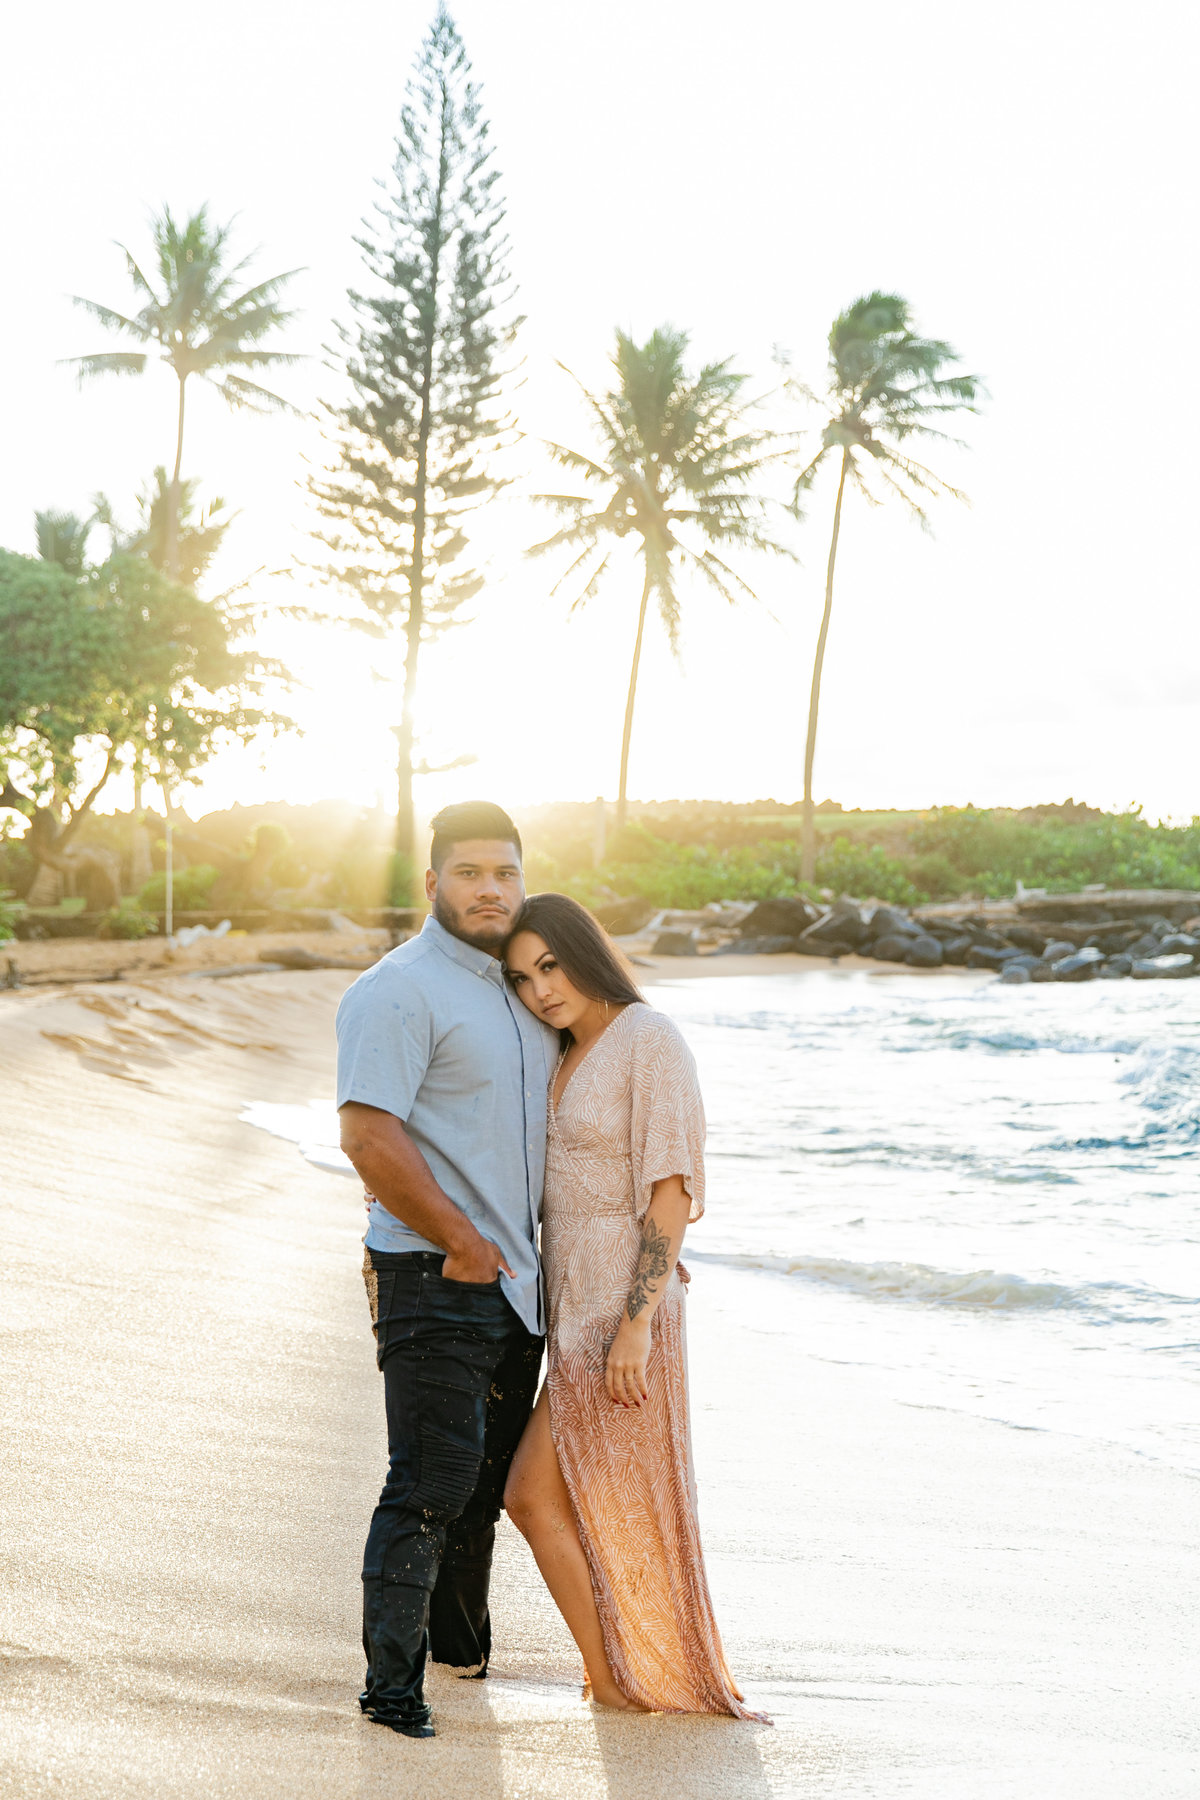 Karlie Colleen Photography - Kauai Hawaii Wedding Photography - Sydney & BJ -110